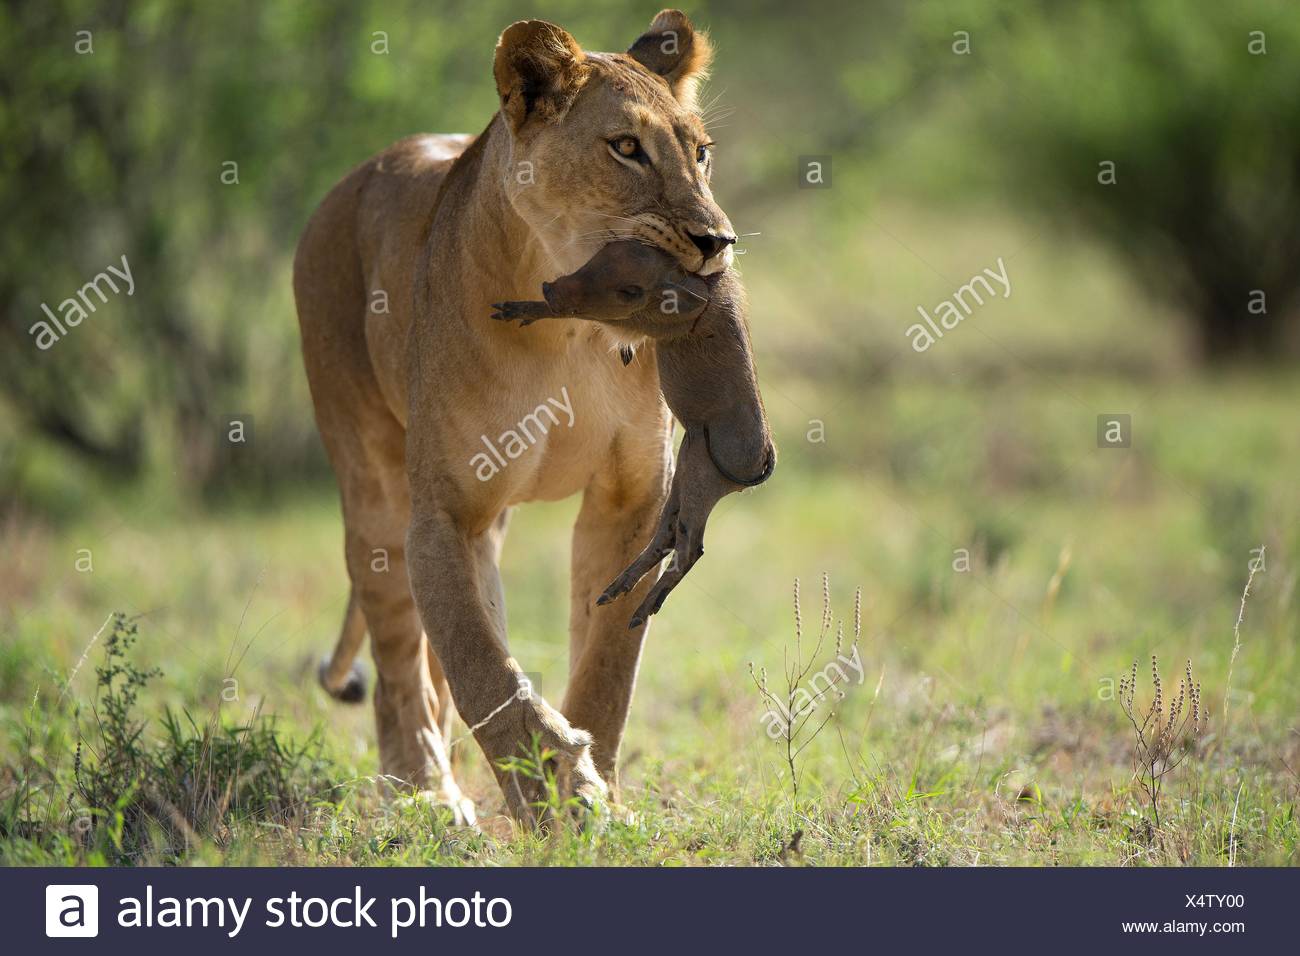 Lion Warthog Immagini E Fotos Stock Alamy